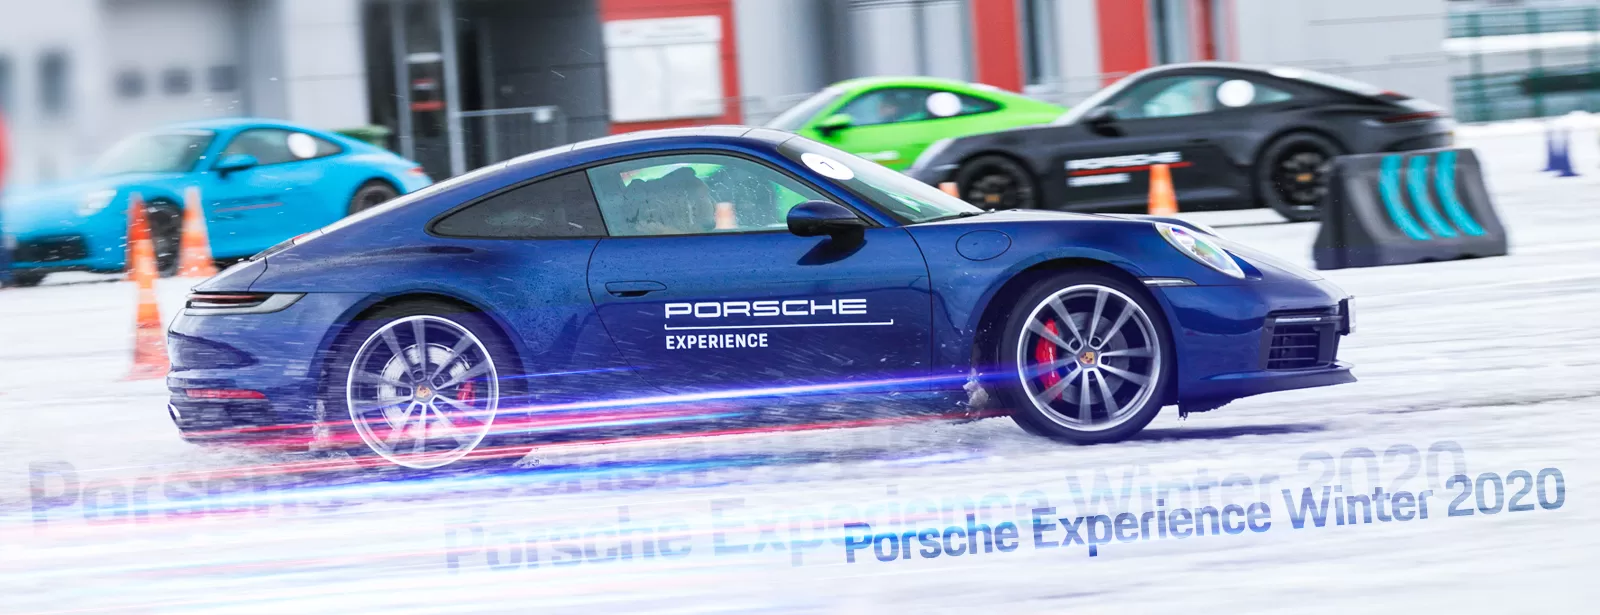 Porsche Experience Winter 2020 — «зимняя сессия» на отлично!